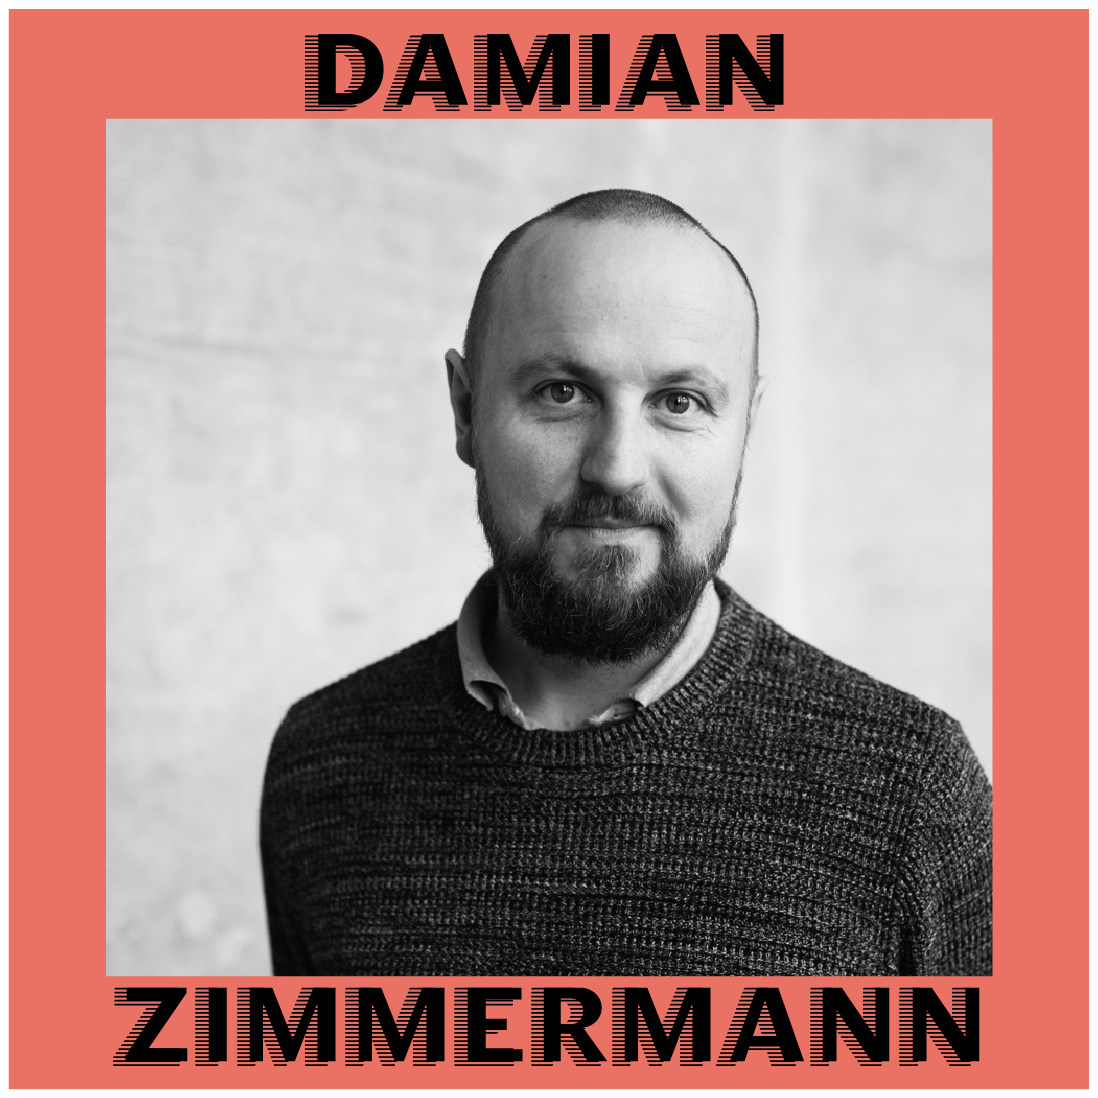 Damian Zimmermann